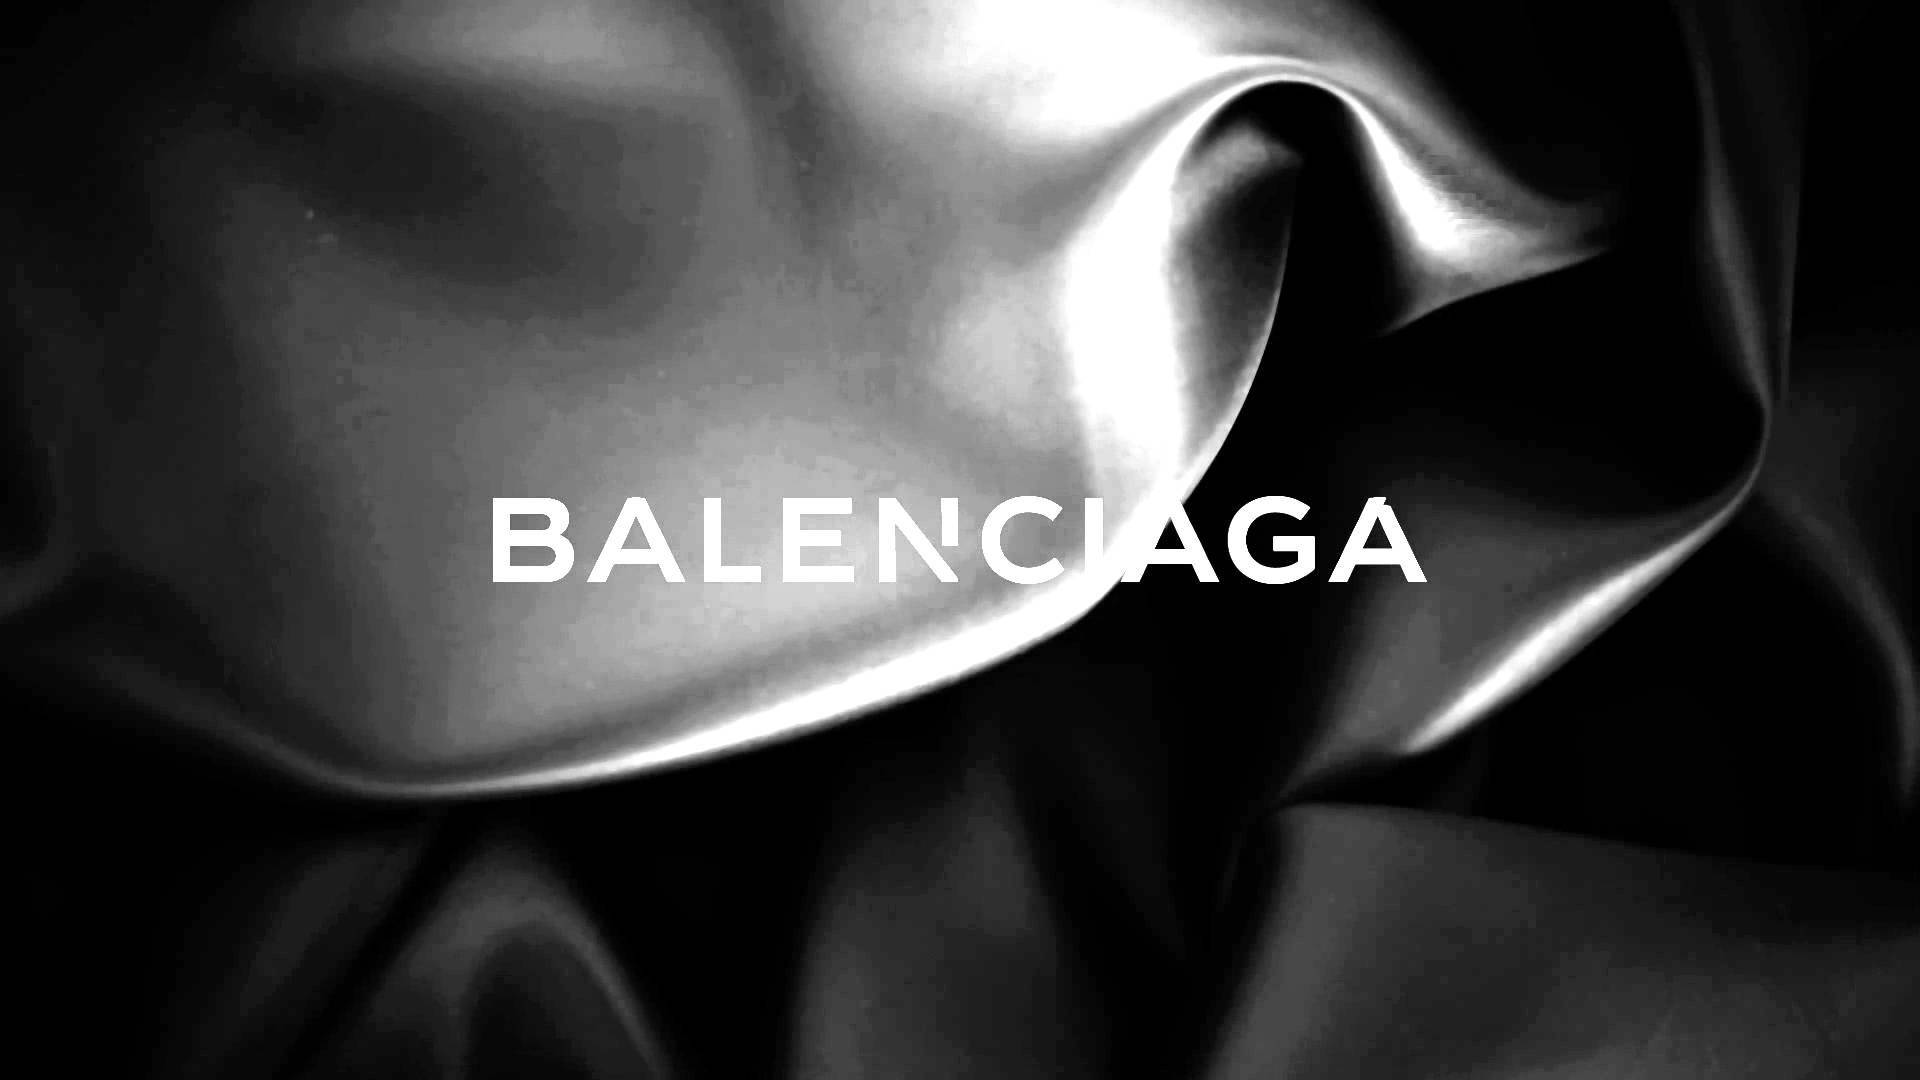 A Look At Balenciagas Most Iconic Moments Through History  แฟชนยค  1950 โปสเตอรสถานททองเทยวสไตลวนเทจ ภาพขาวดำ